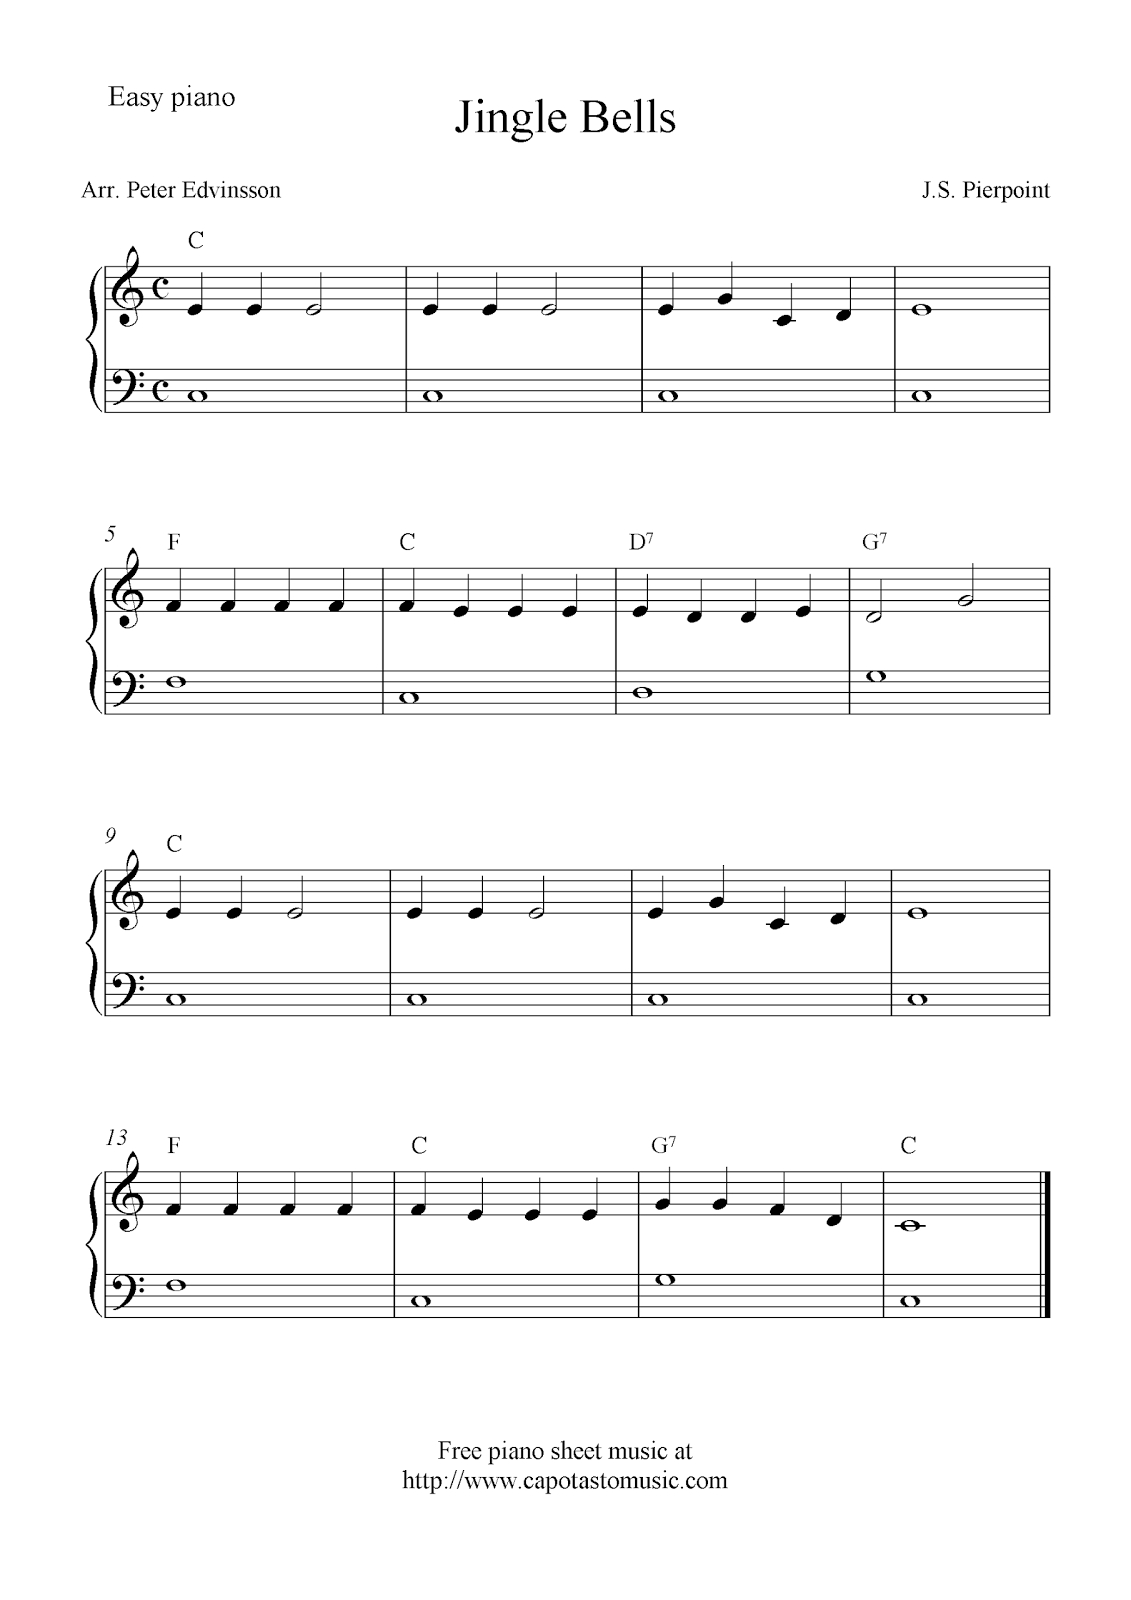 Gamekyo : Printable Pdf Sheet Music For Piano Christmas Songs For - Free Christmas Piano Sheet Music For Beginners Printable